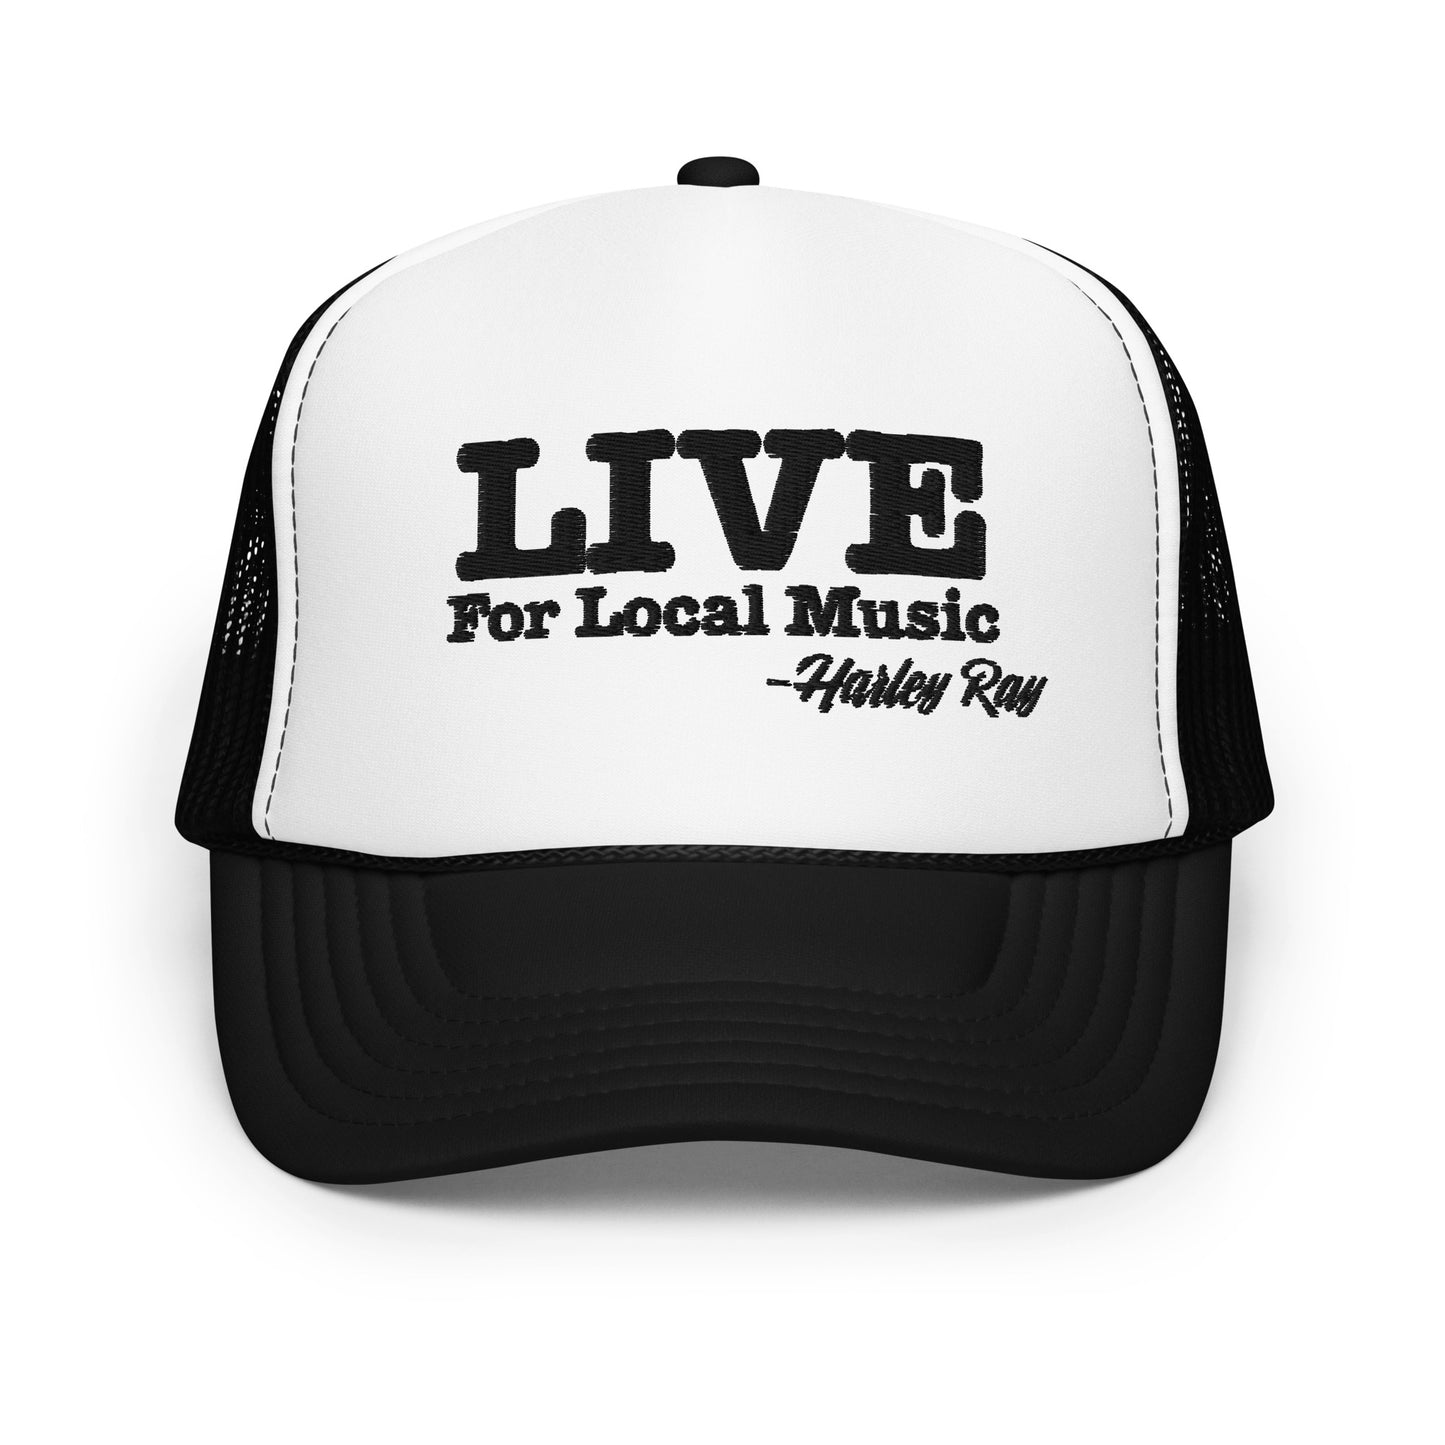 LIVE For Local Music Foam trucker hat